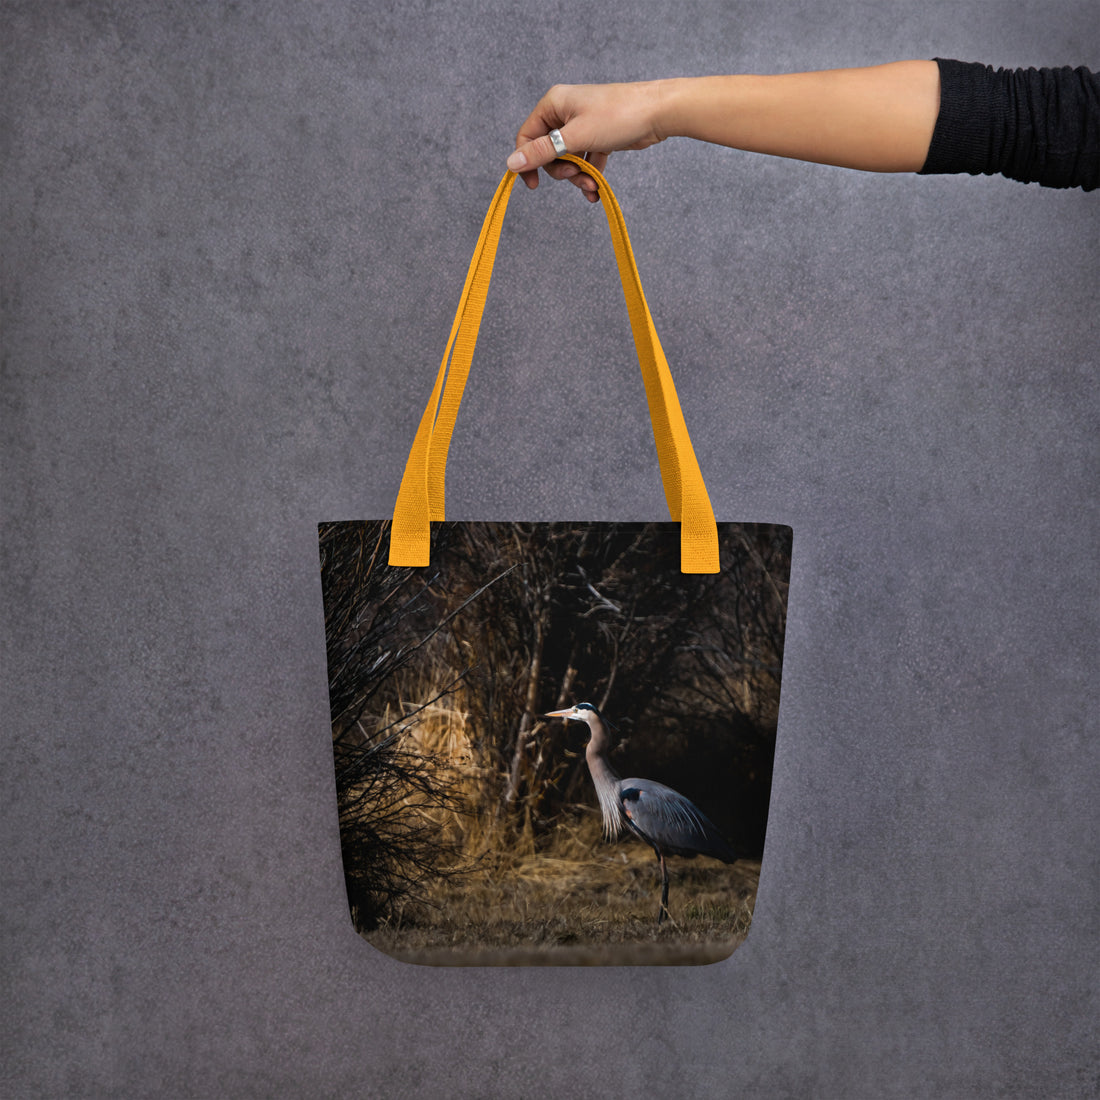 Blue Heron Tote bag